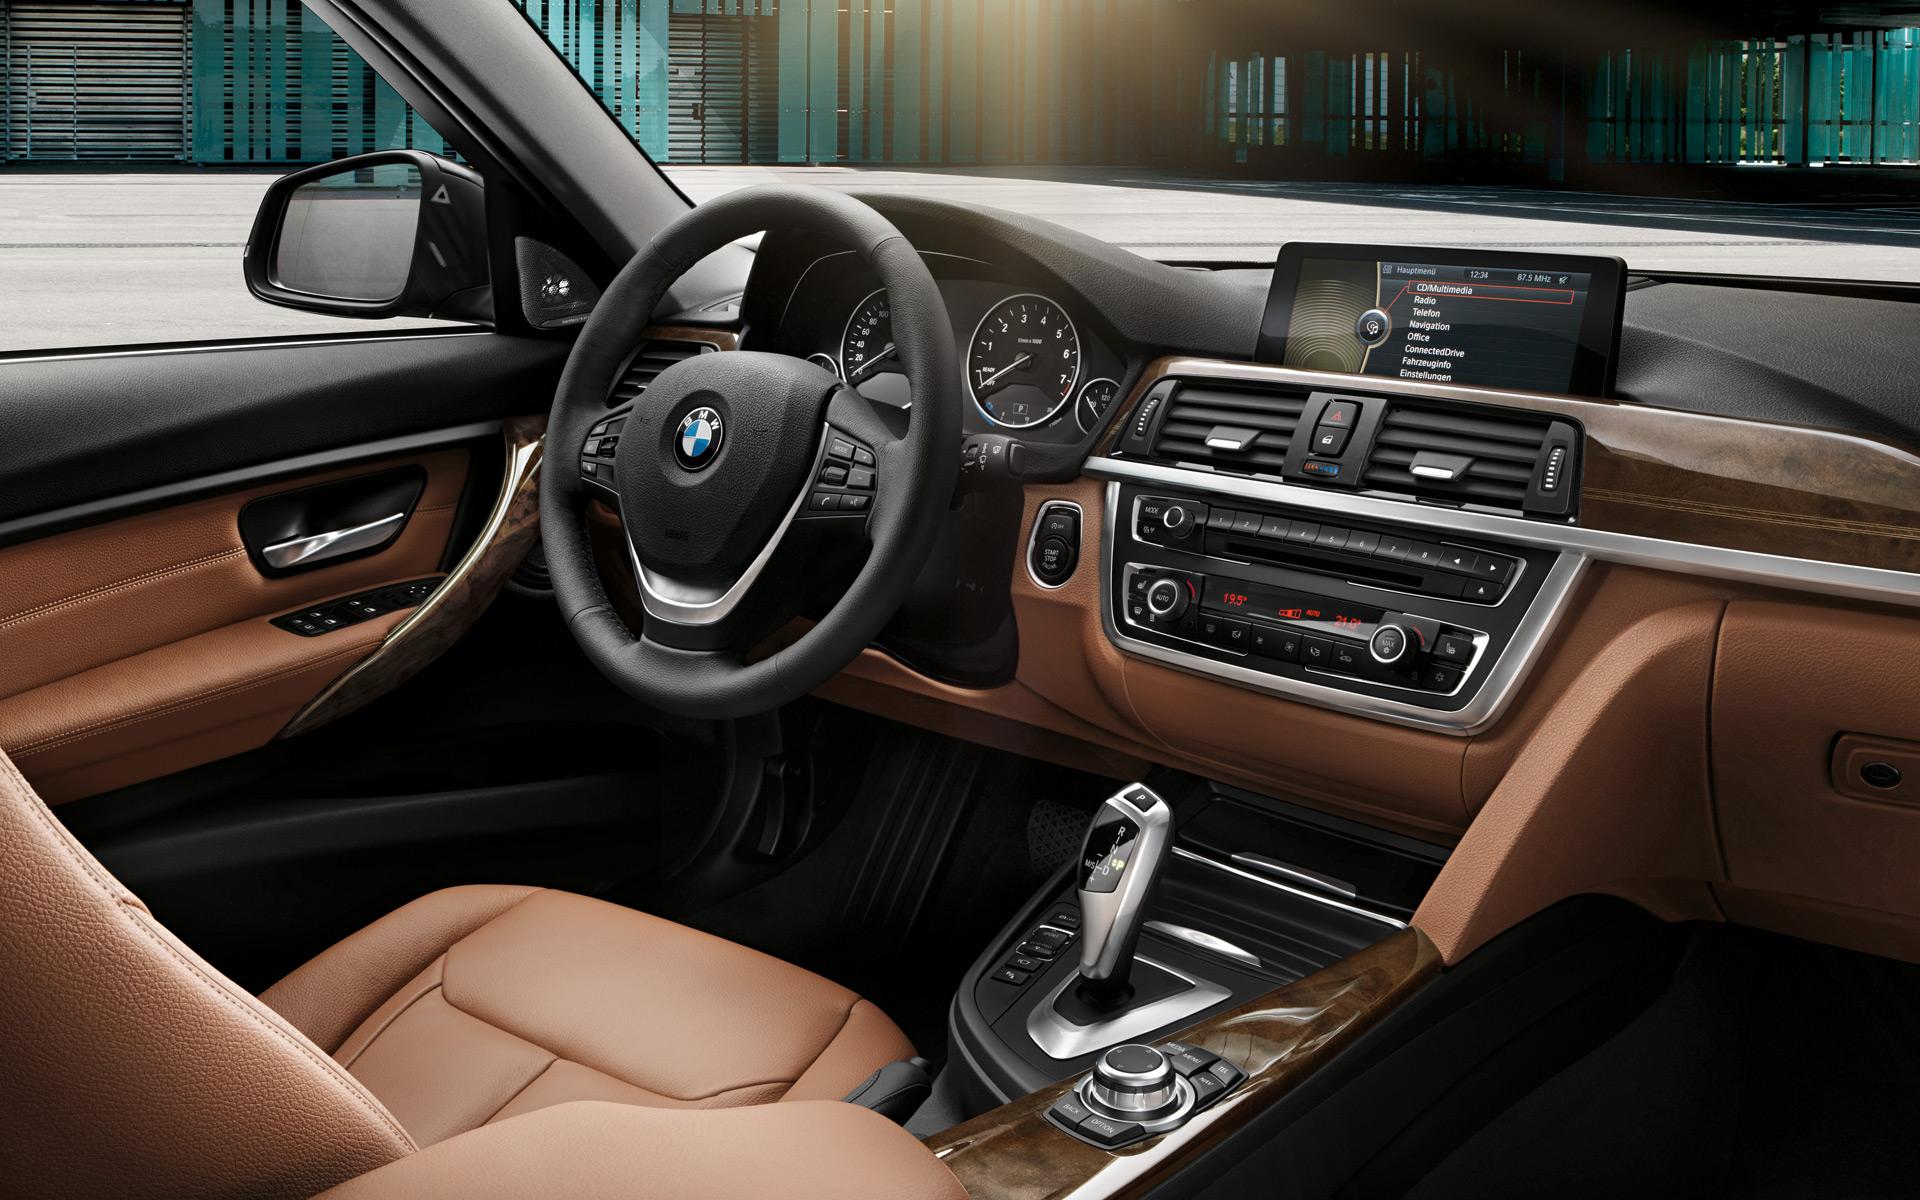 BMW 3 Series Interior Wallpaper 44674 1920x1200px